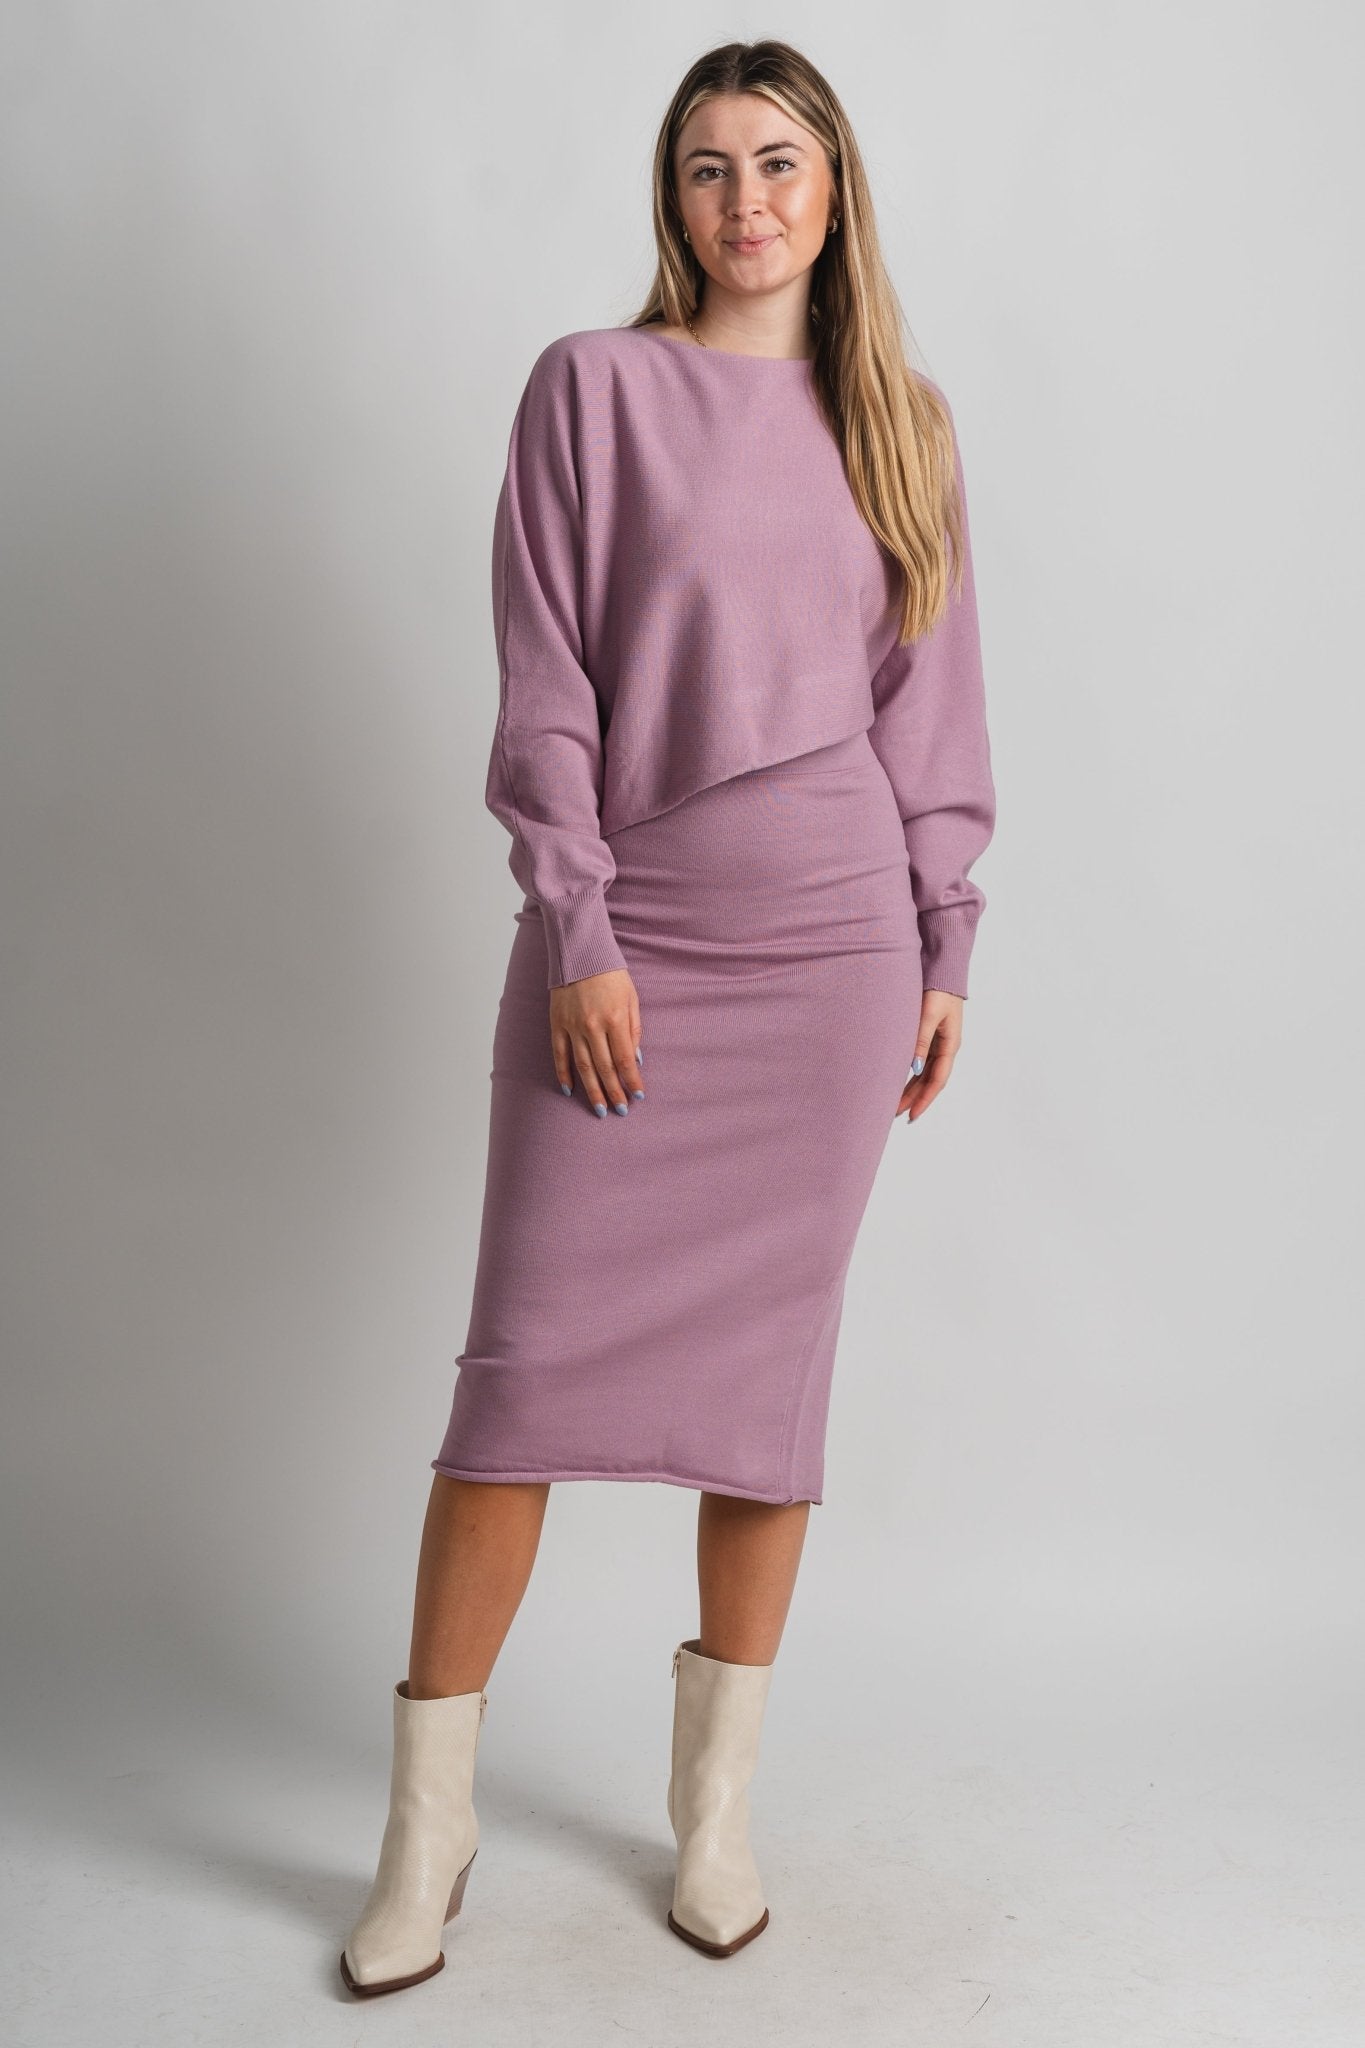 Sweater midi skirt mauve | Lush Fashion Lounge: boutique fashion skirts, affordable boutique skirts, cute affordable skirts